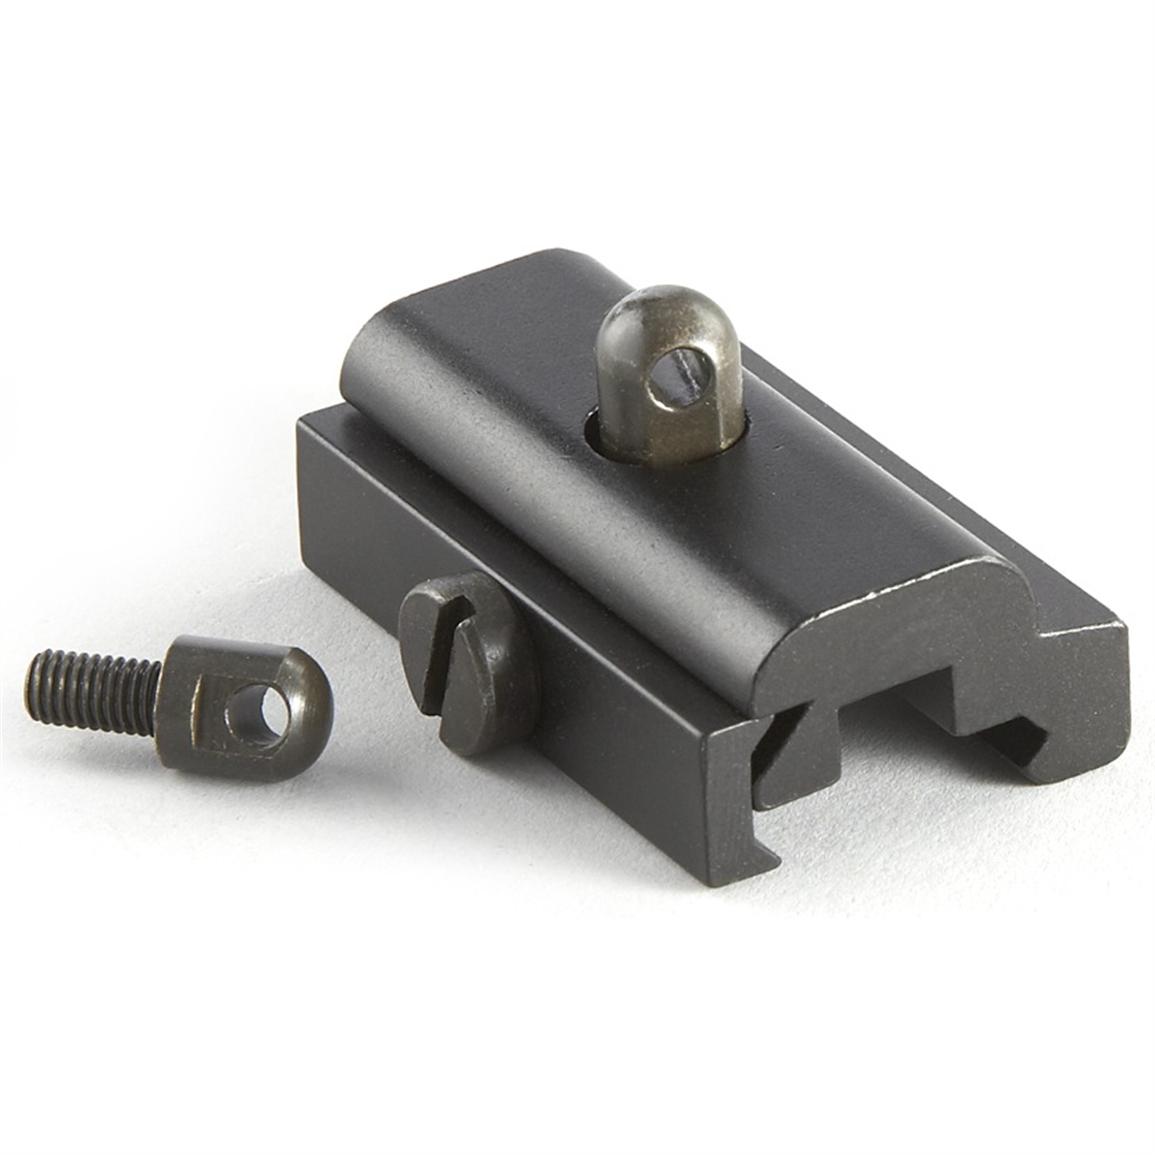 Rifle Bipod Accessories GMG Aluminum Bipod Adapter